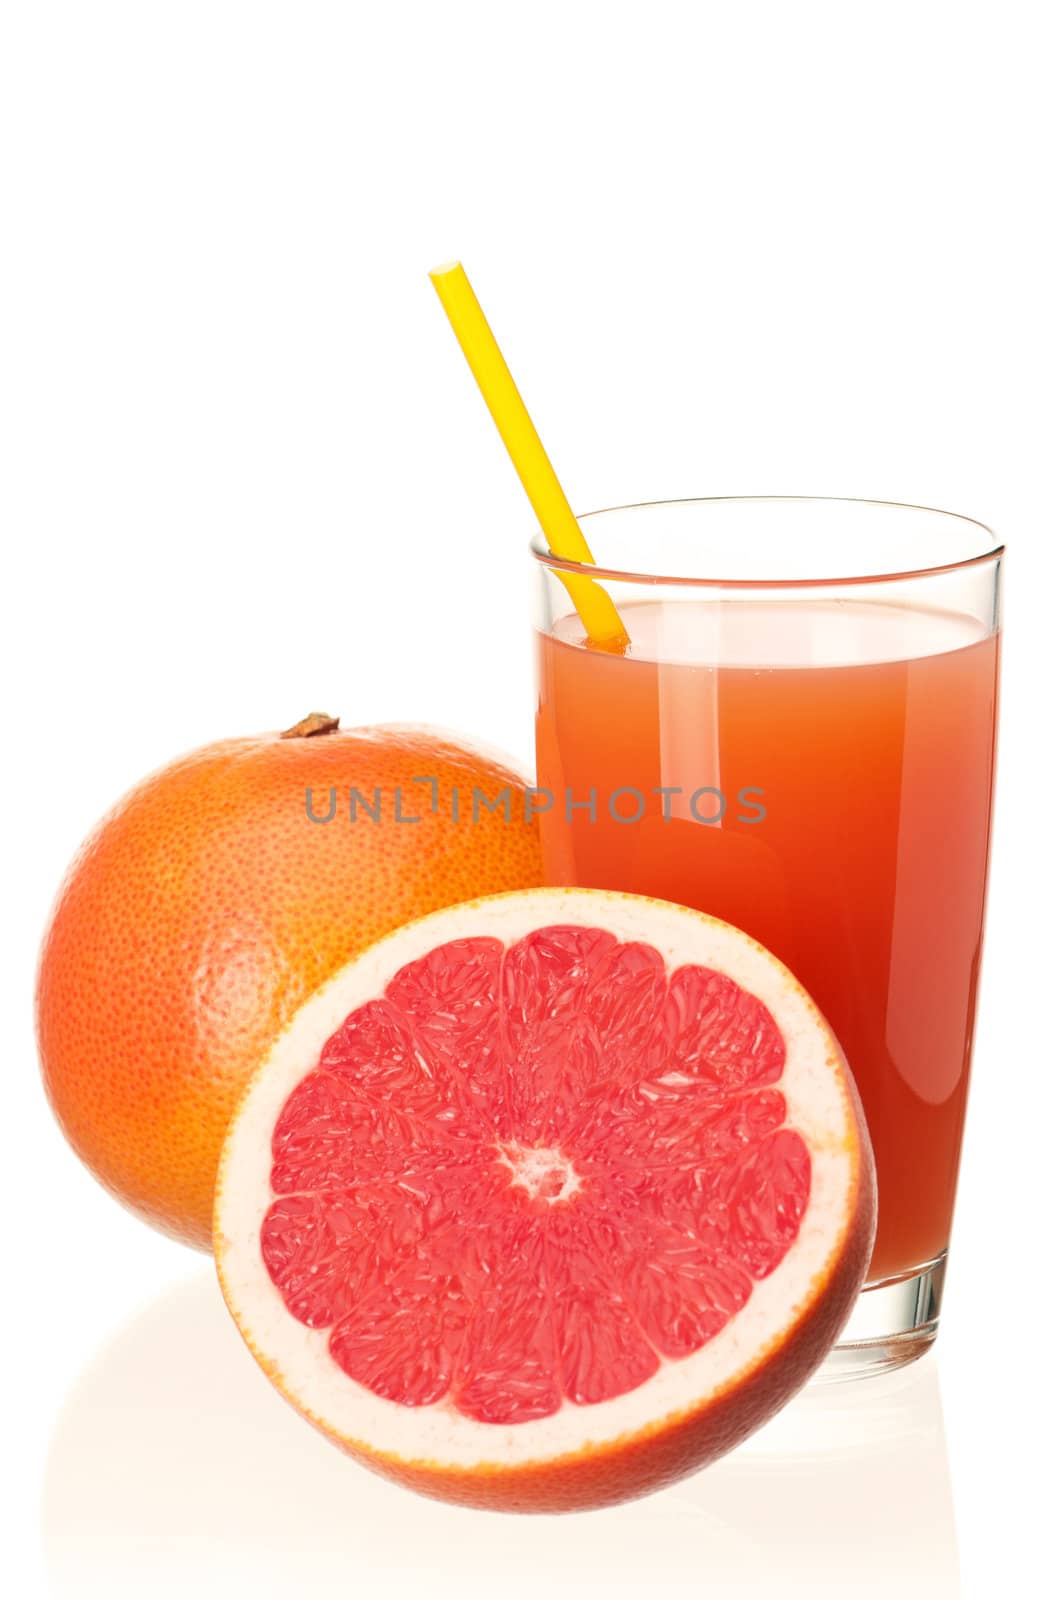 Glass of fresh grapefruit juice and grapefruit fruits on white background